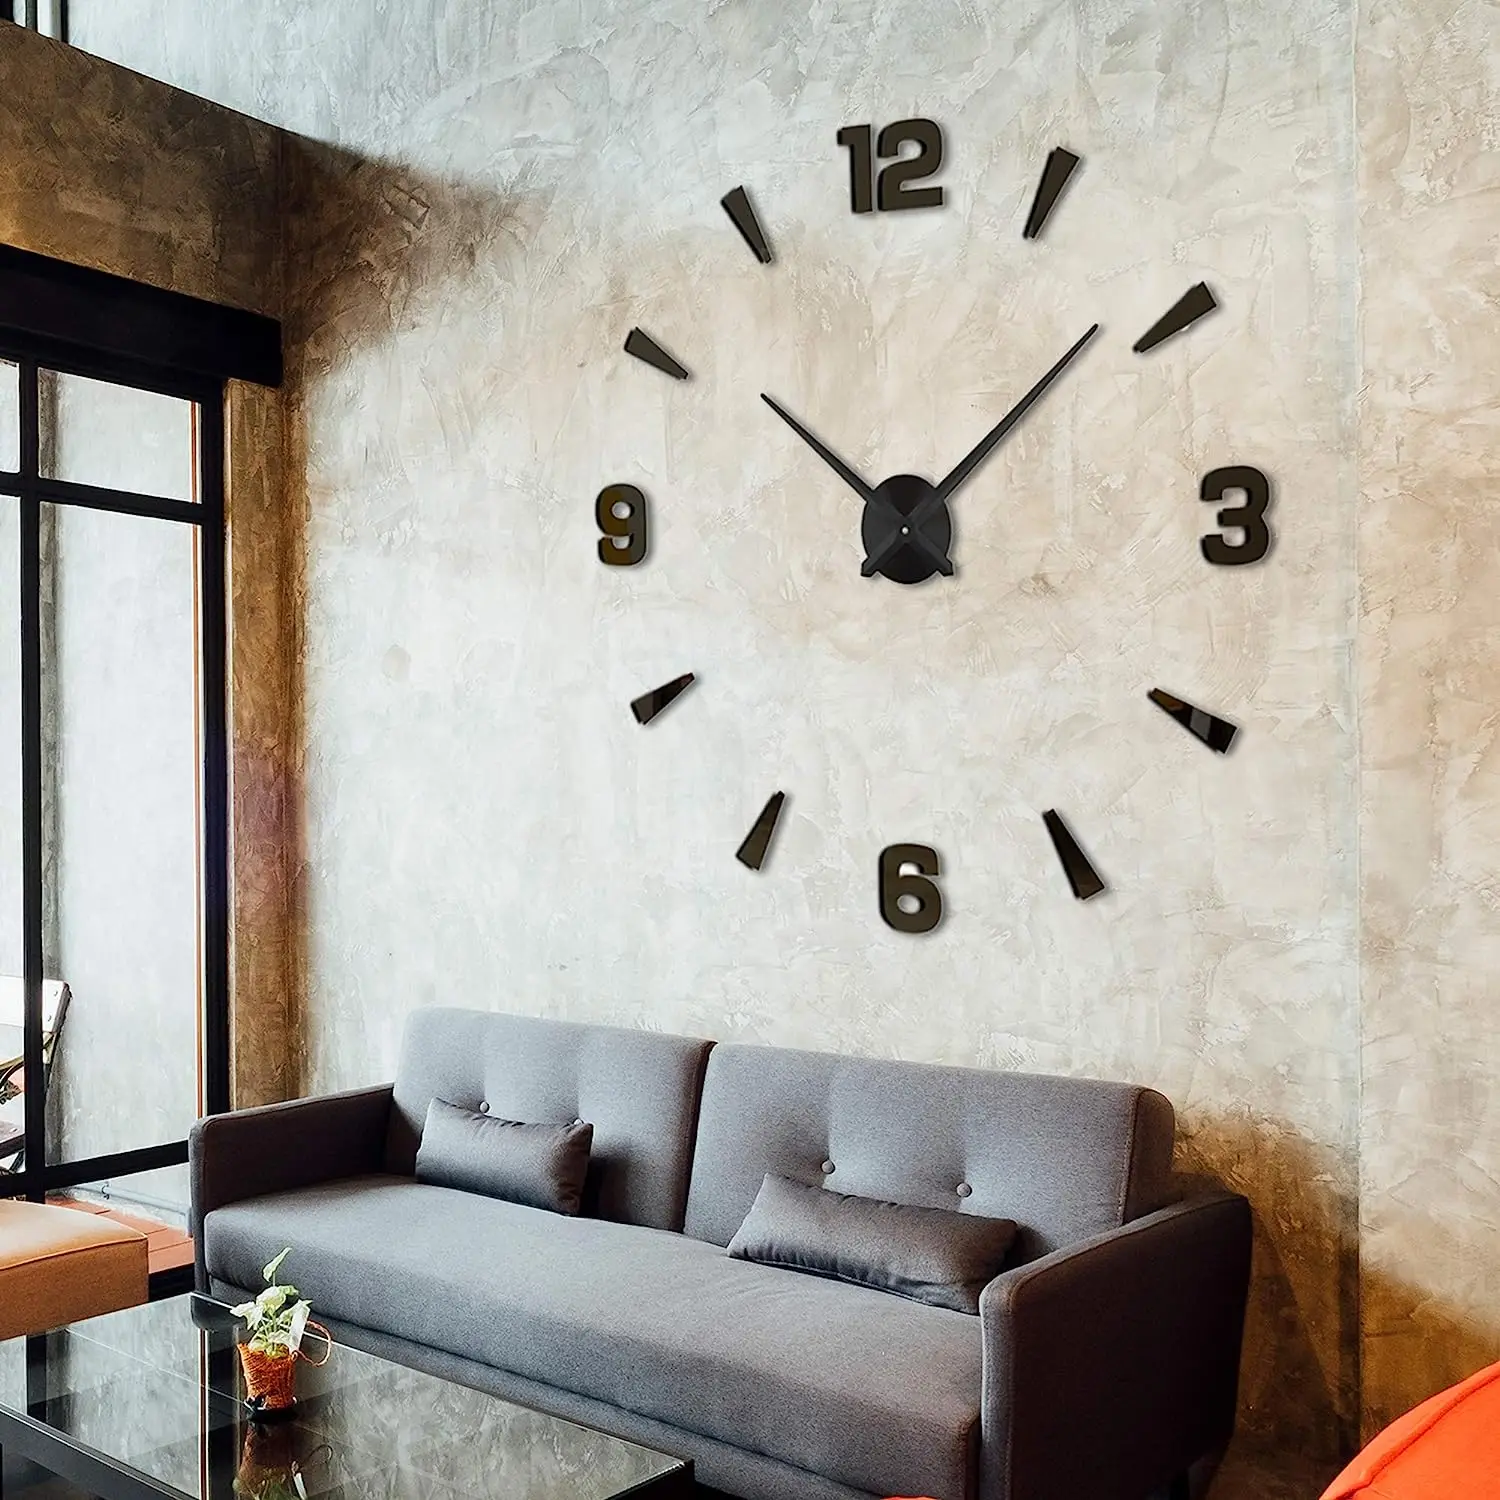 

Large 3D DIY Wall Clock Giant Acrylic Mirror Clocks Frameless Big Horloge Home Decoration for Living Room Bedroom Wall Decor